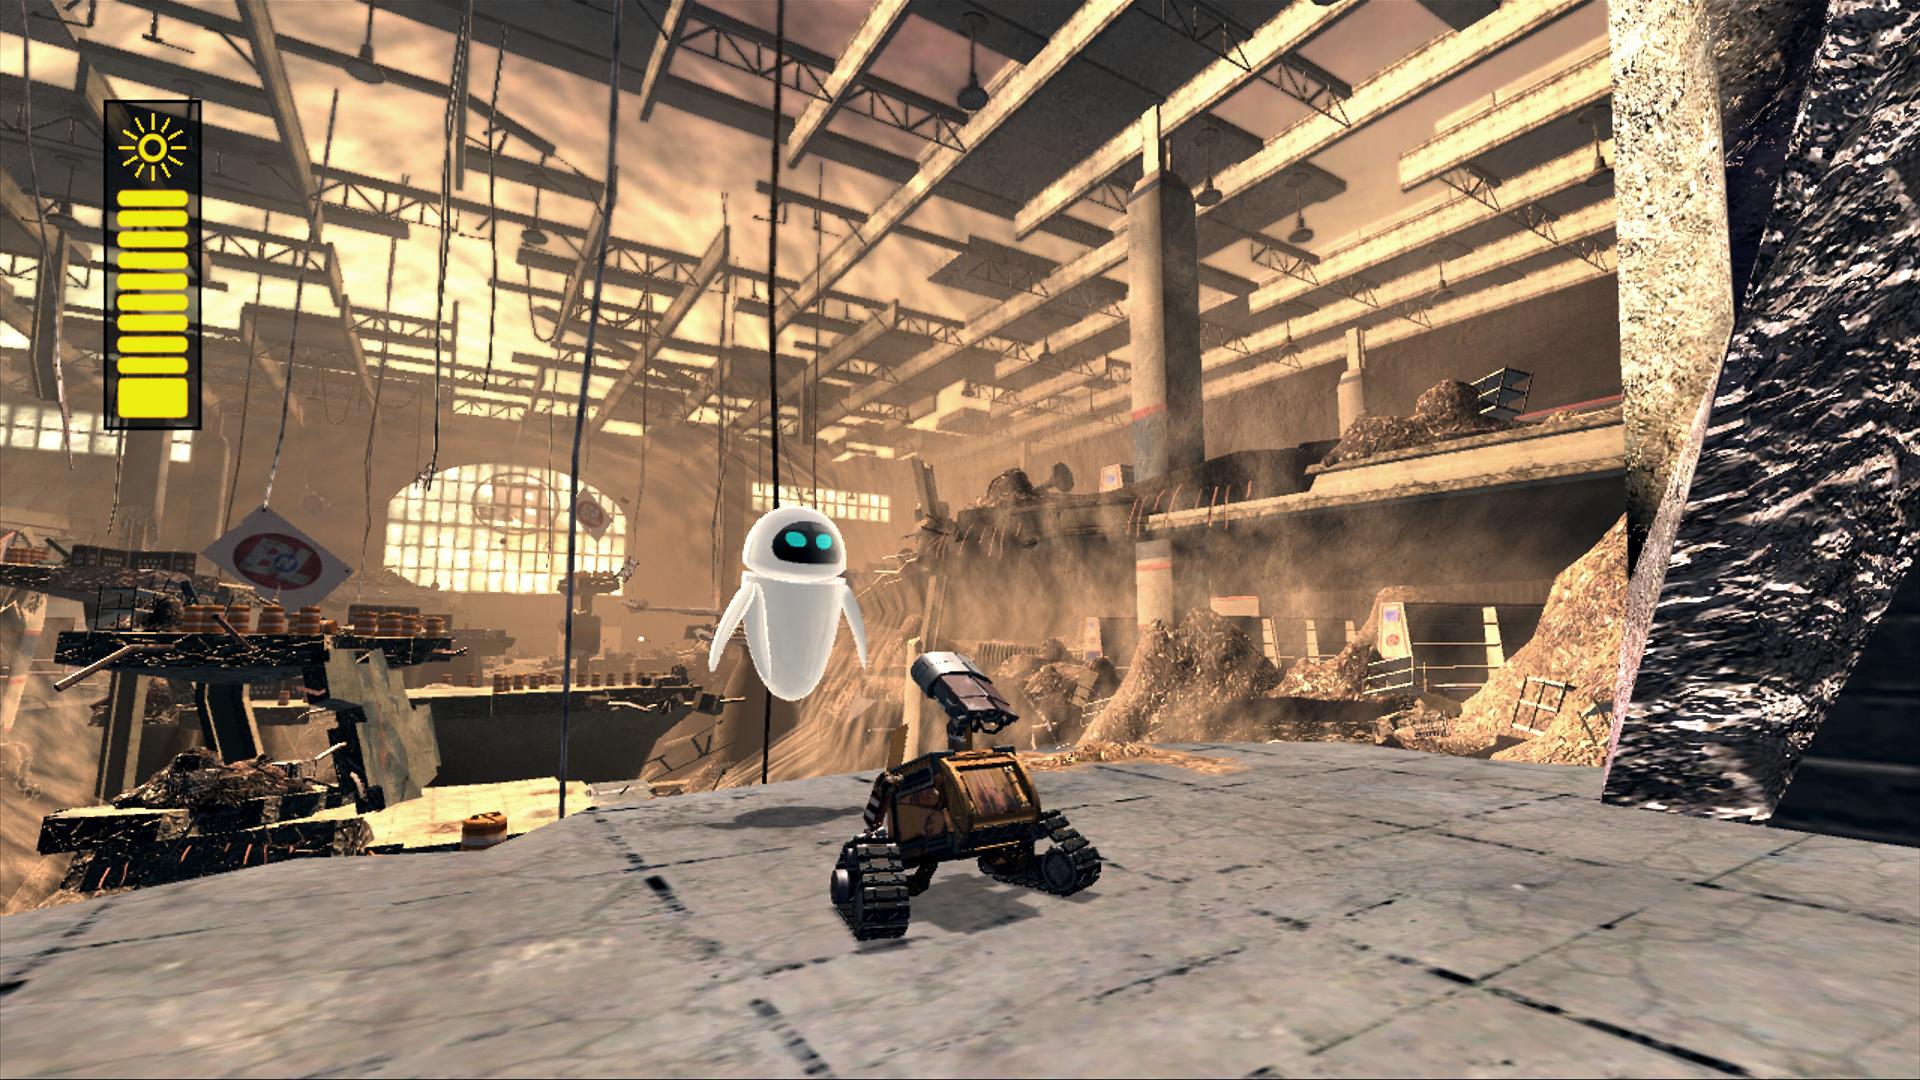 WALL-E - PlayStation 2 (PS2) Game